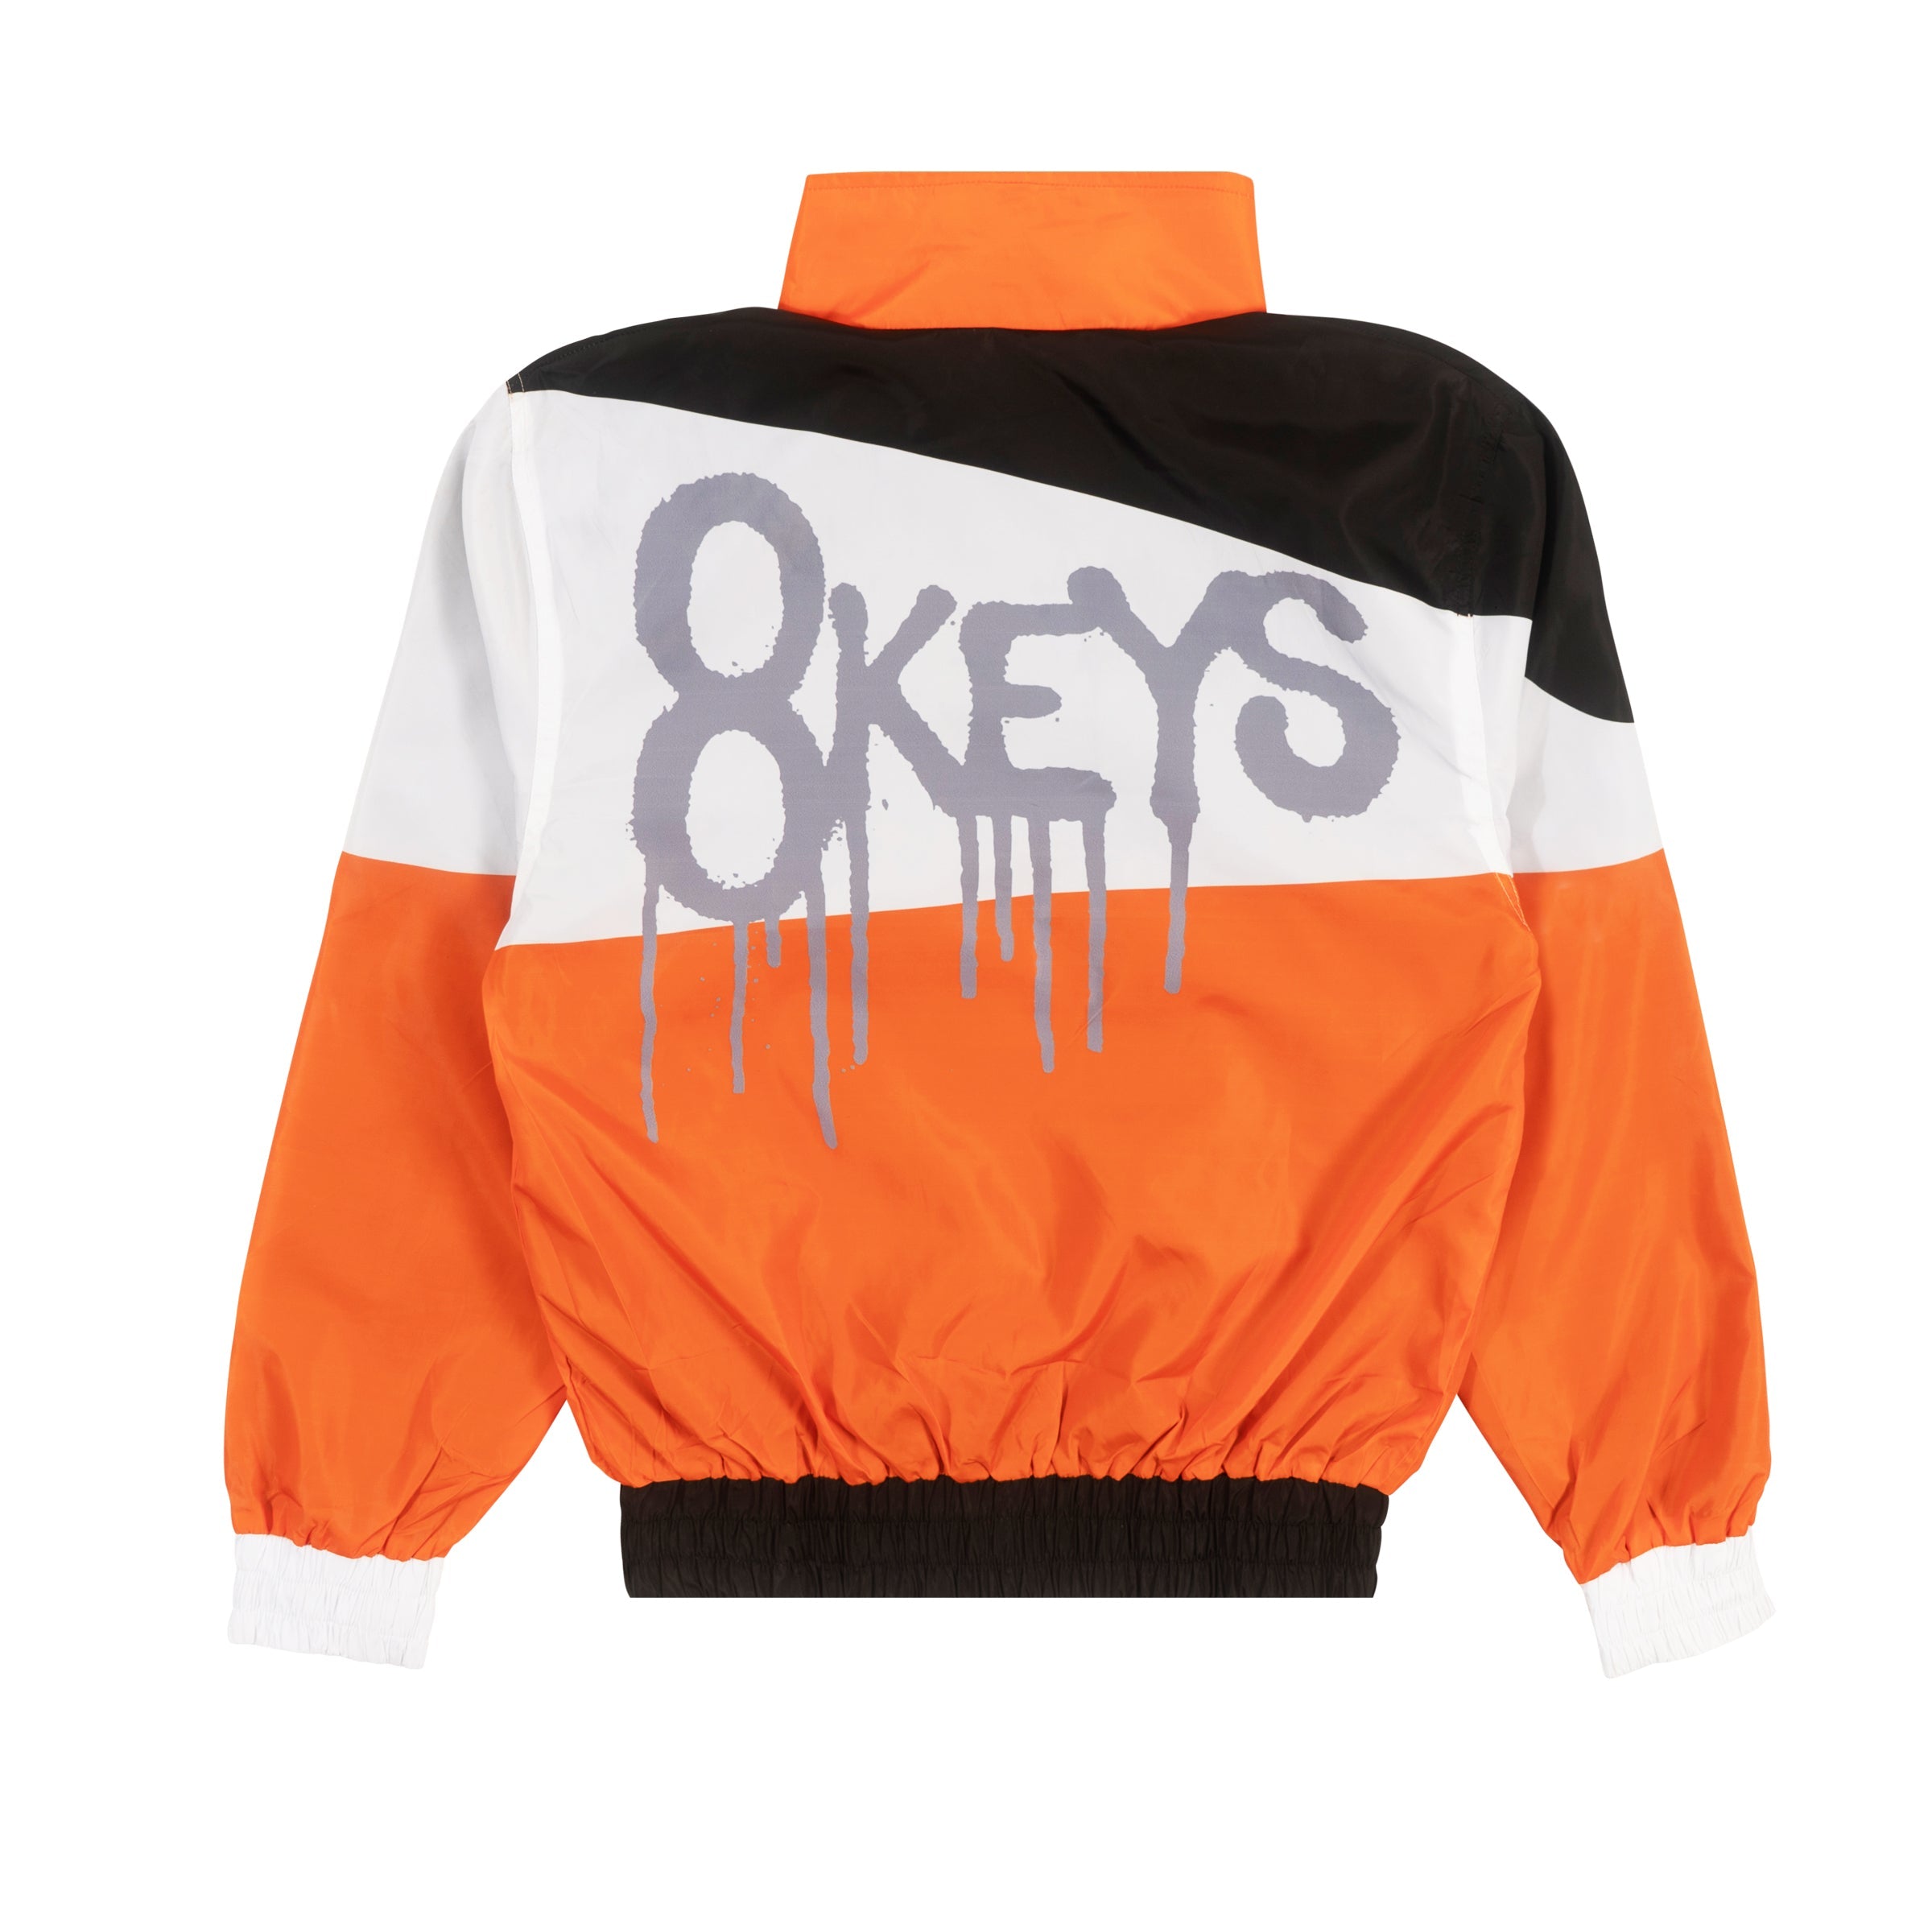 8keys Orange word series tracksuit